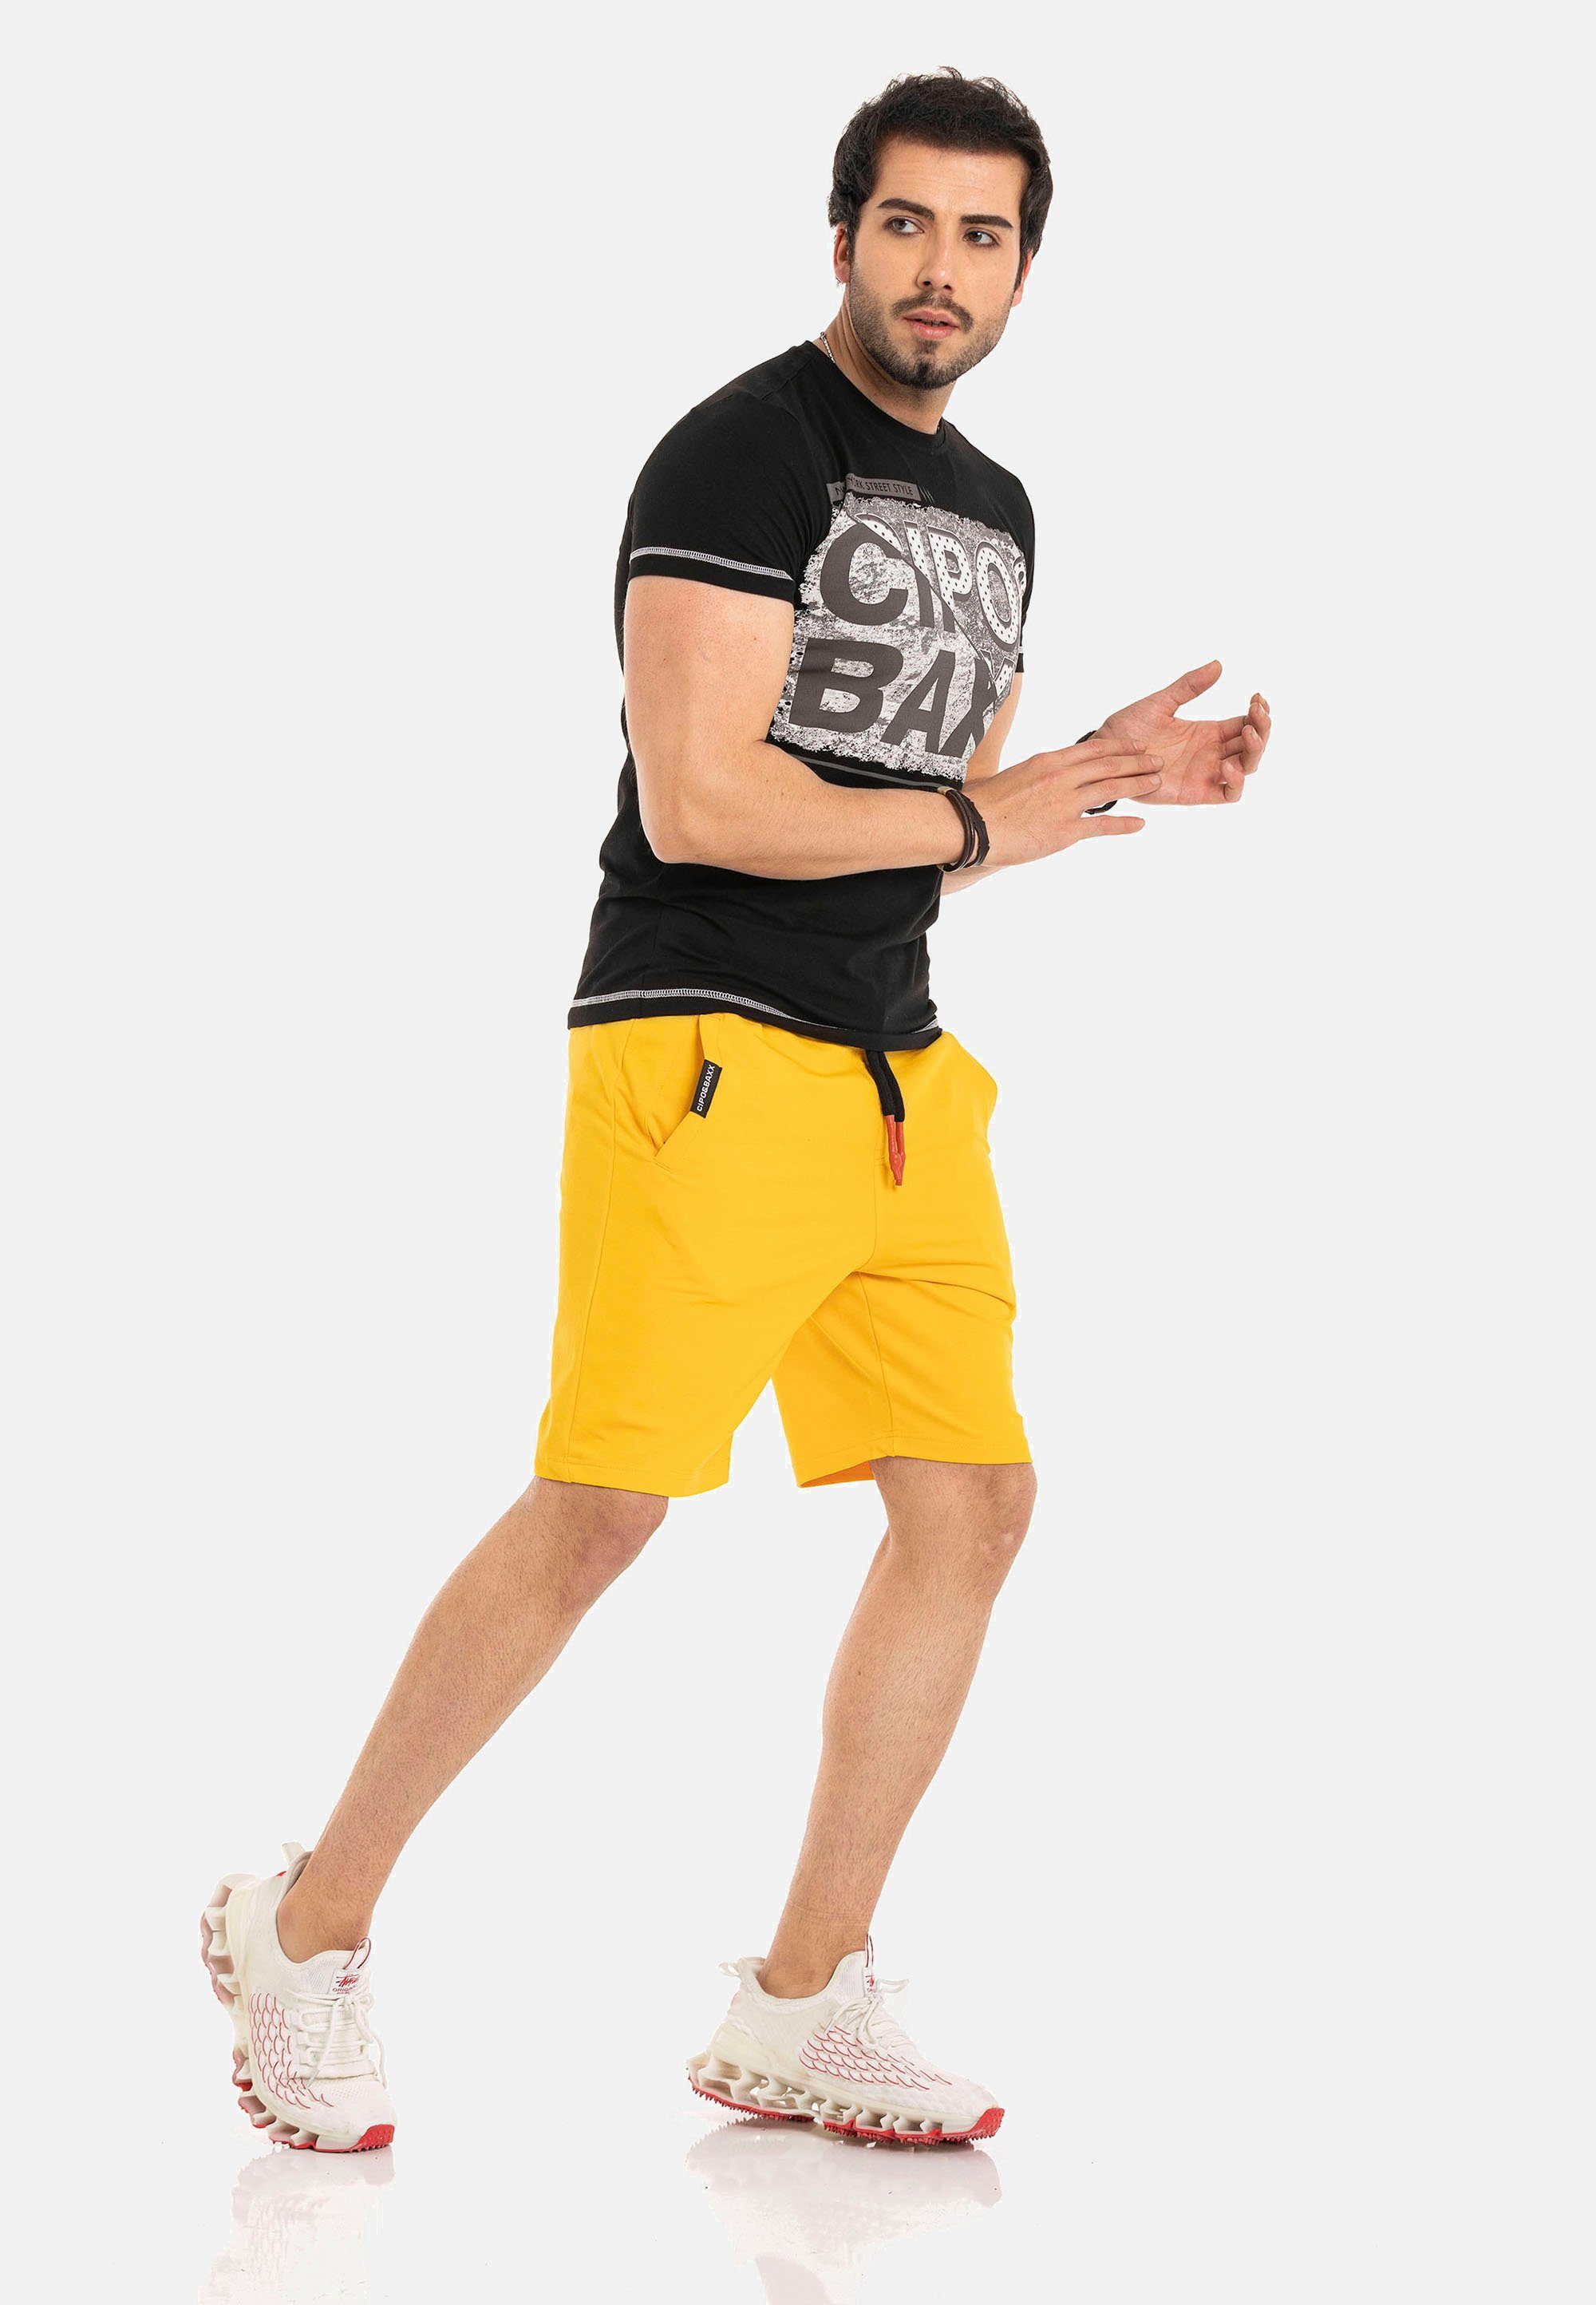 Cipo & Baxx Shorts in sportlichem gelb Look